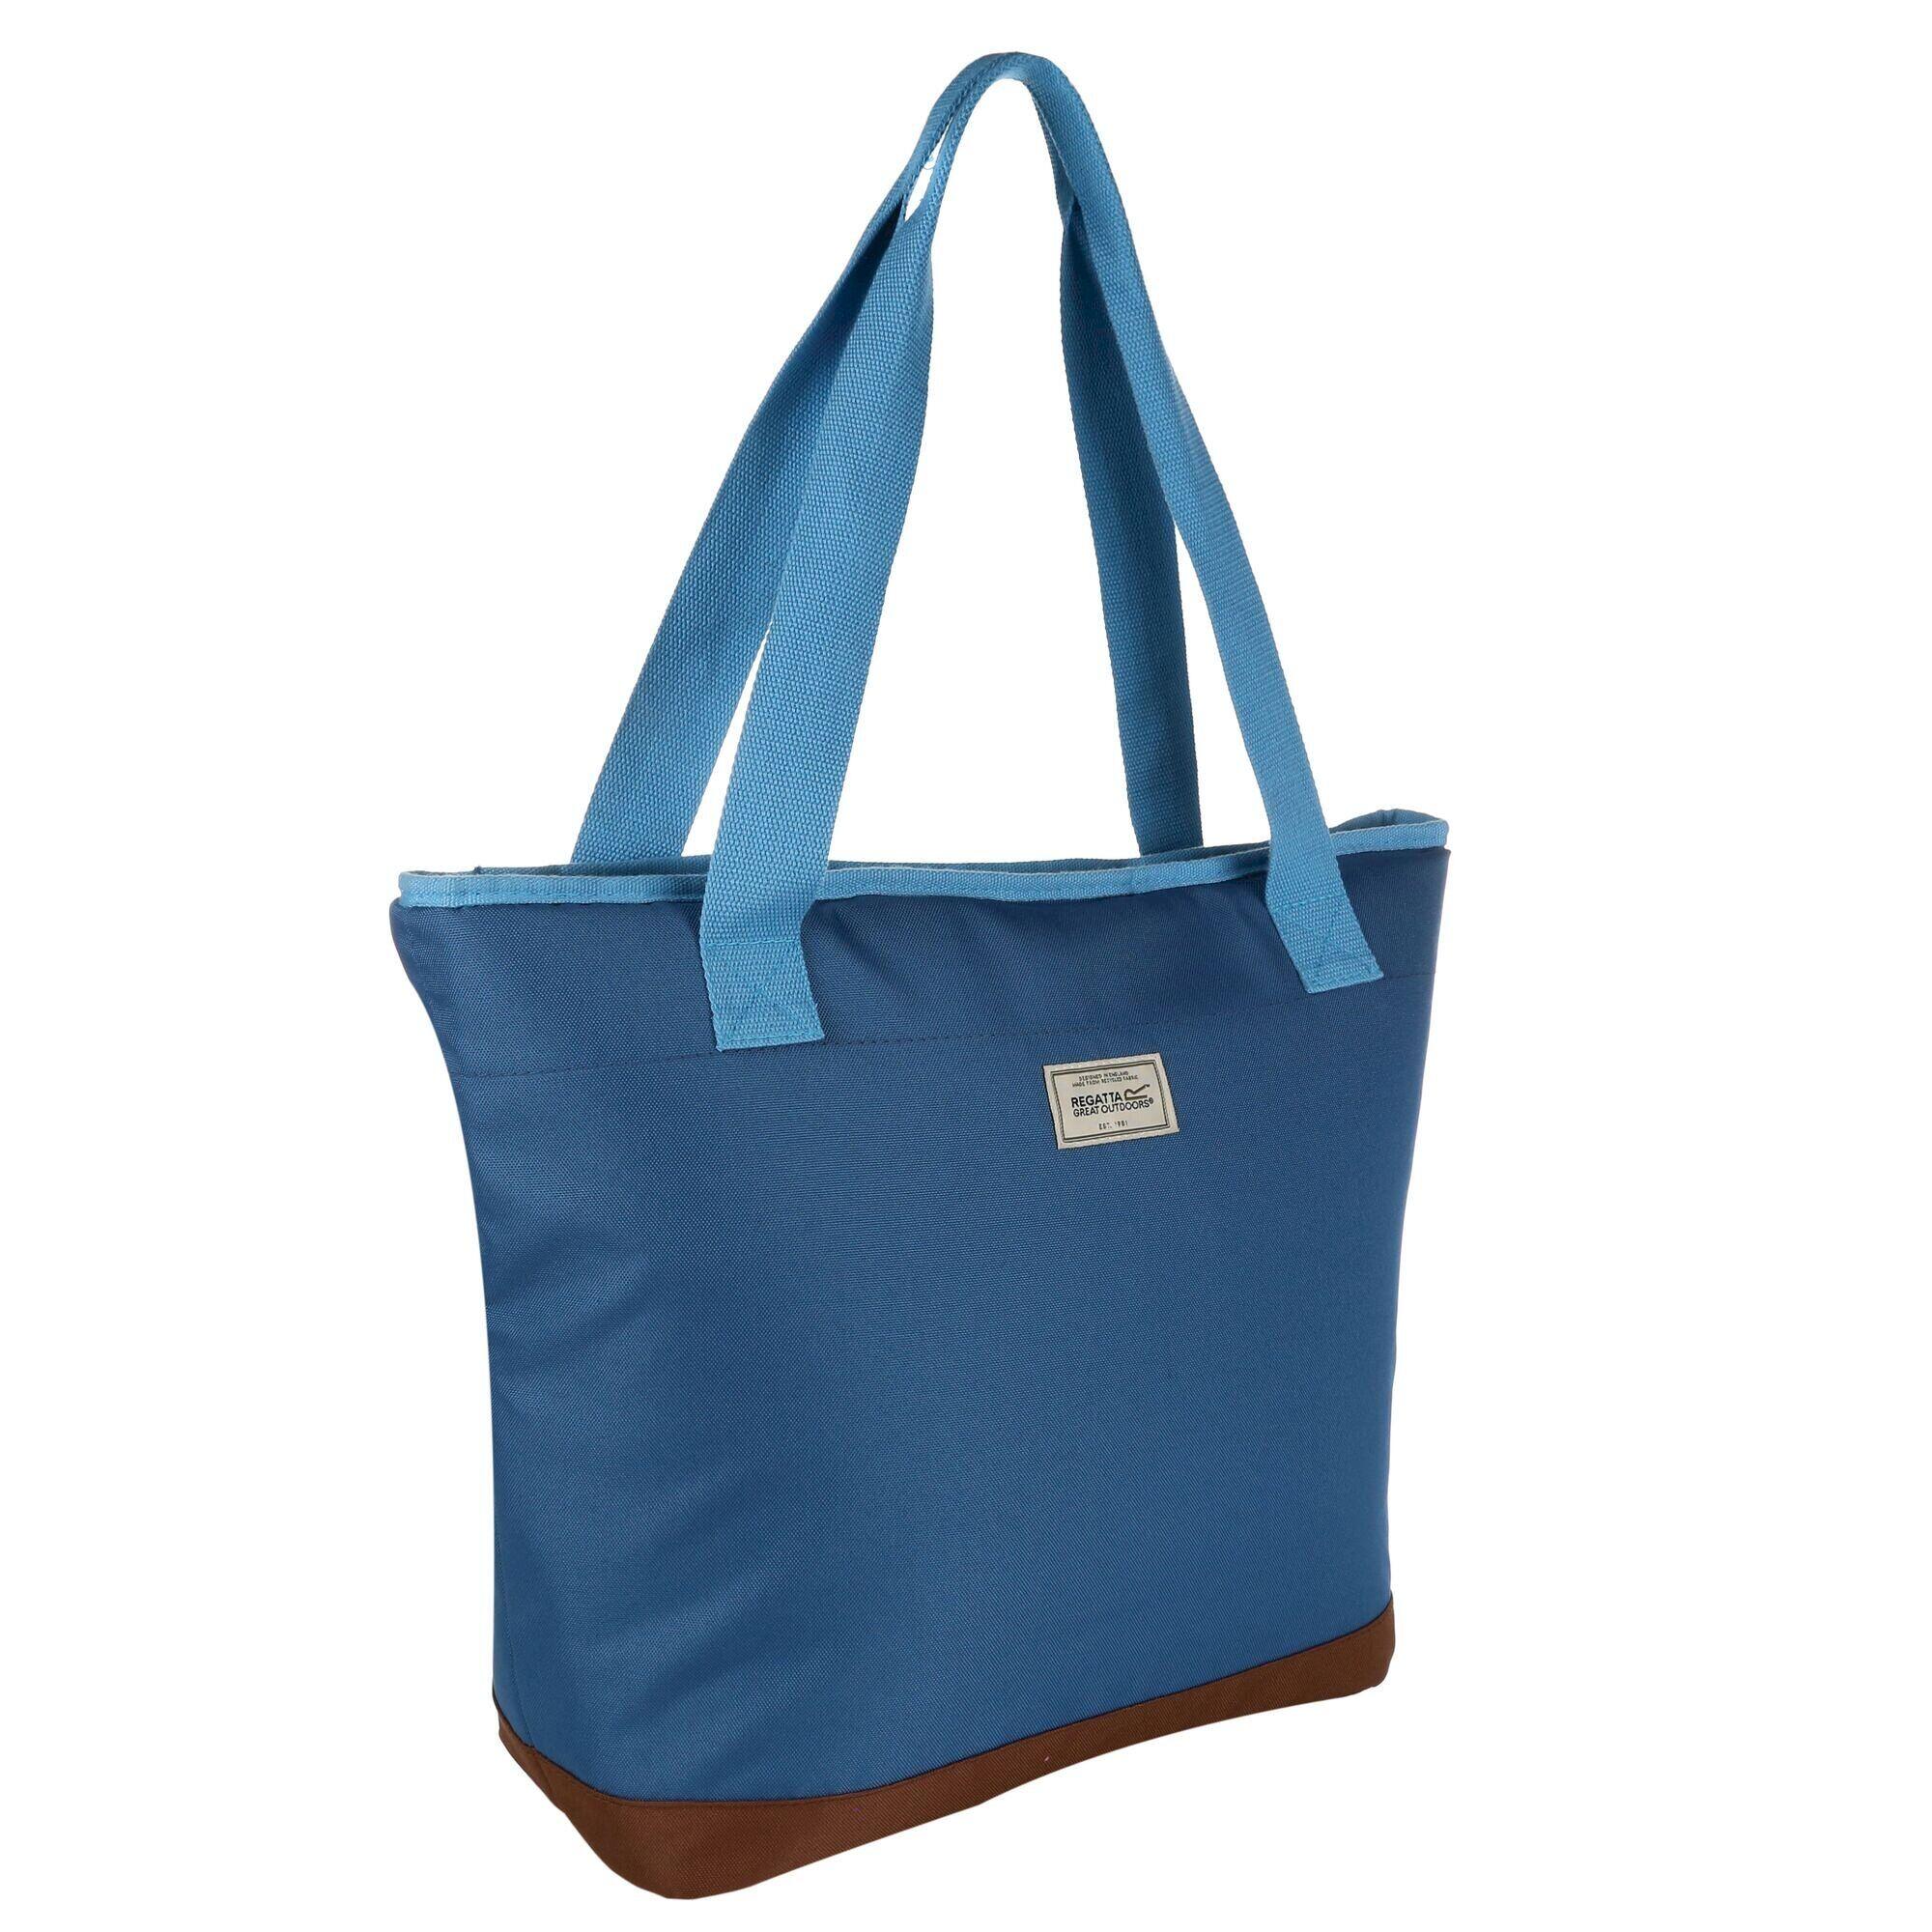 REGATTA Stamford Beach 16L Shoulder Bag (Stellar Blue/Maui Blue)